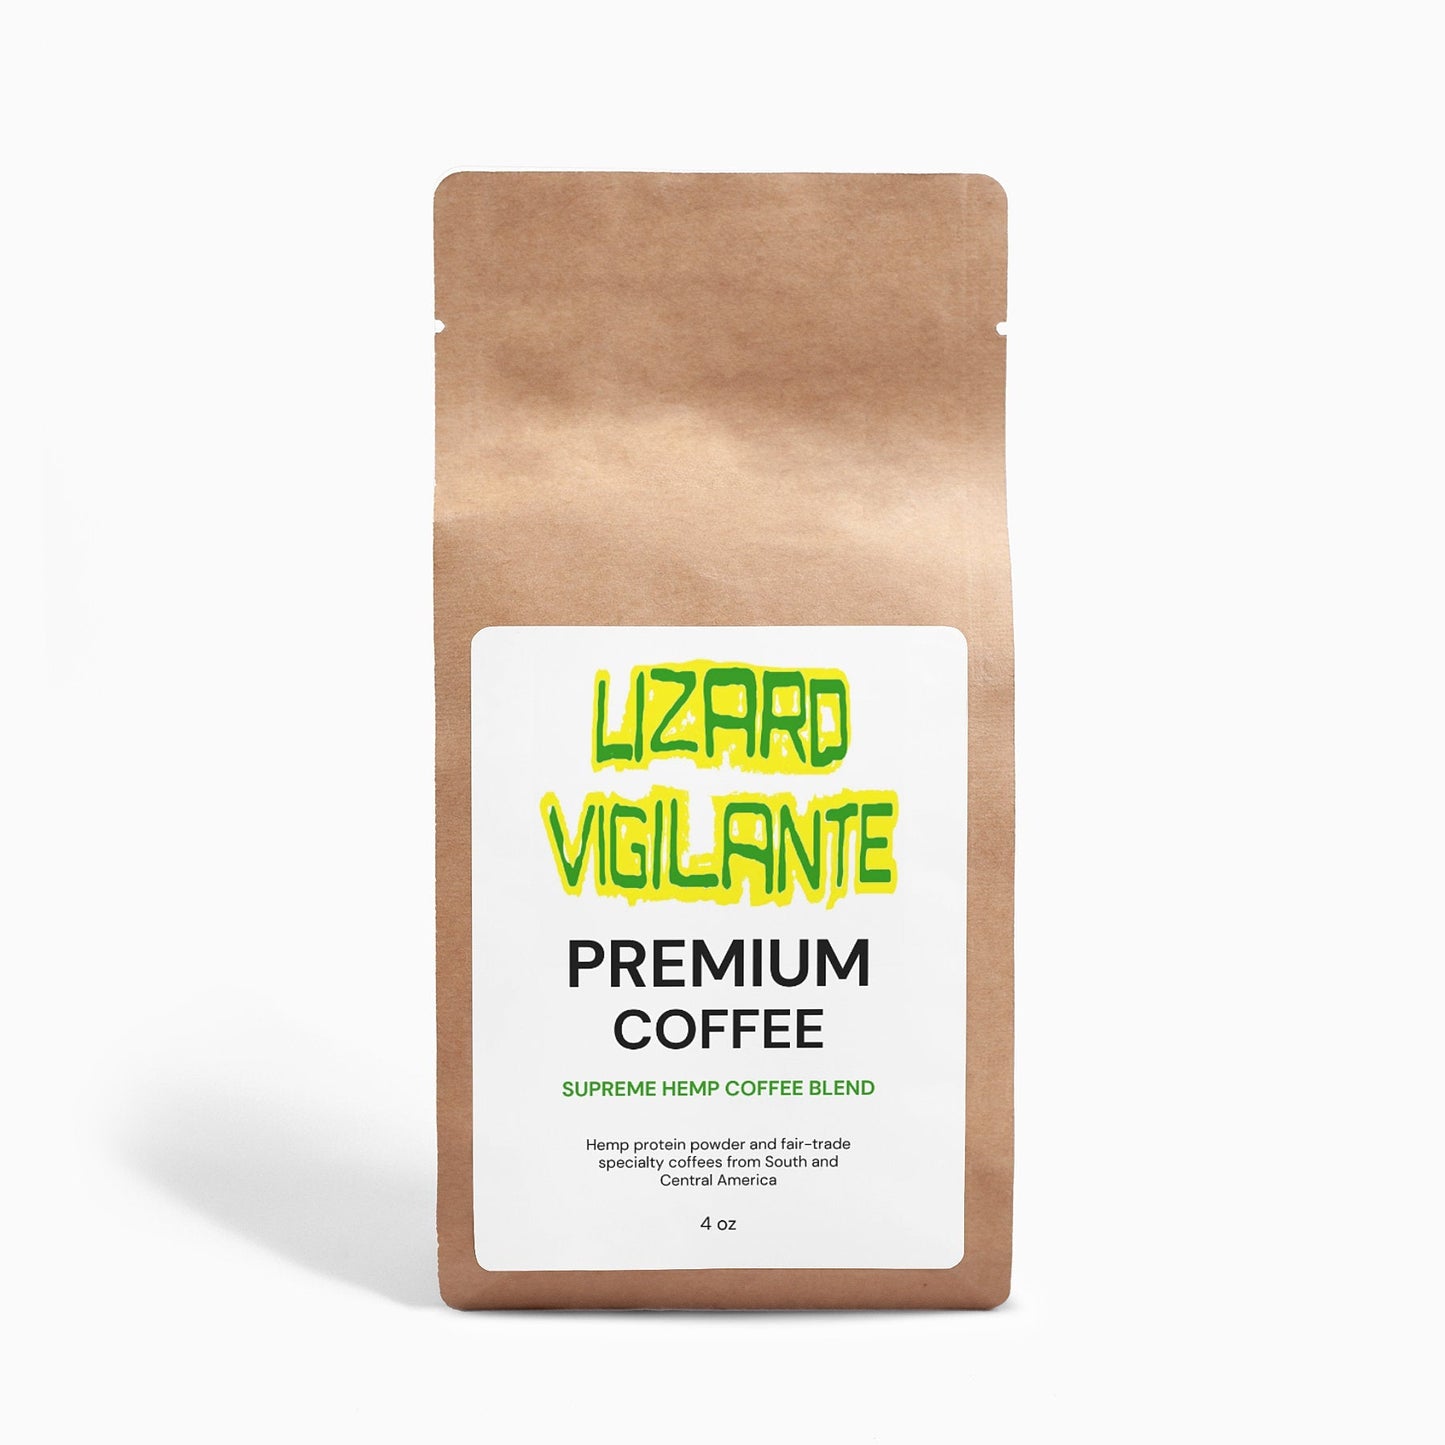 Lizard Vigilante Premium Hemp Coffee Blend - Medium Roast 4oz -Subscription Plan Available at Discount! - Premium Food & Beverages from Lizard Vigilante - Just $15.99! Shop now at Lizard Vigilante